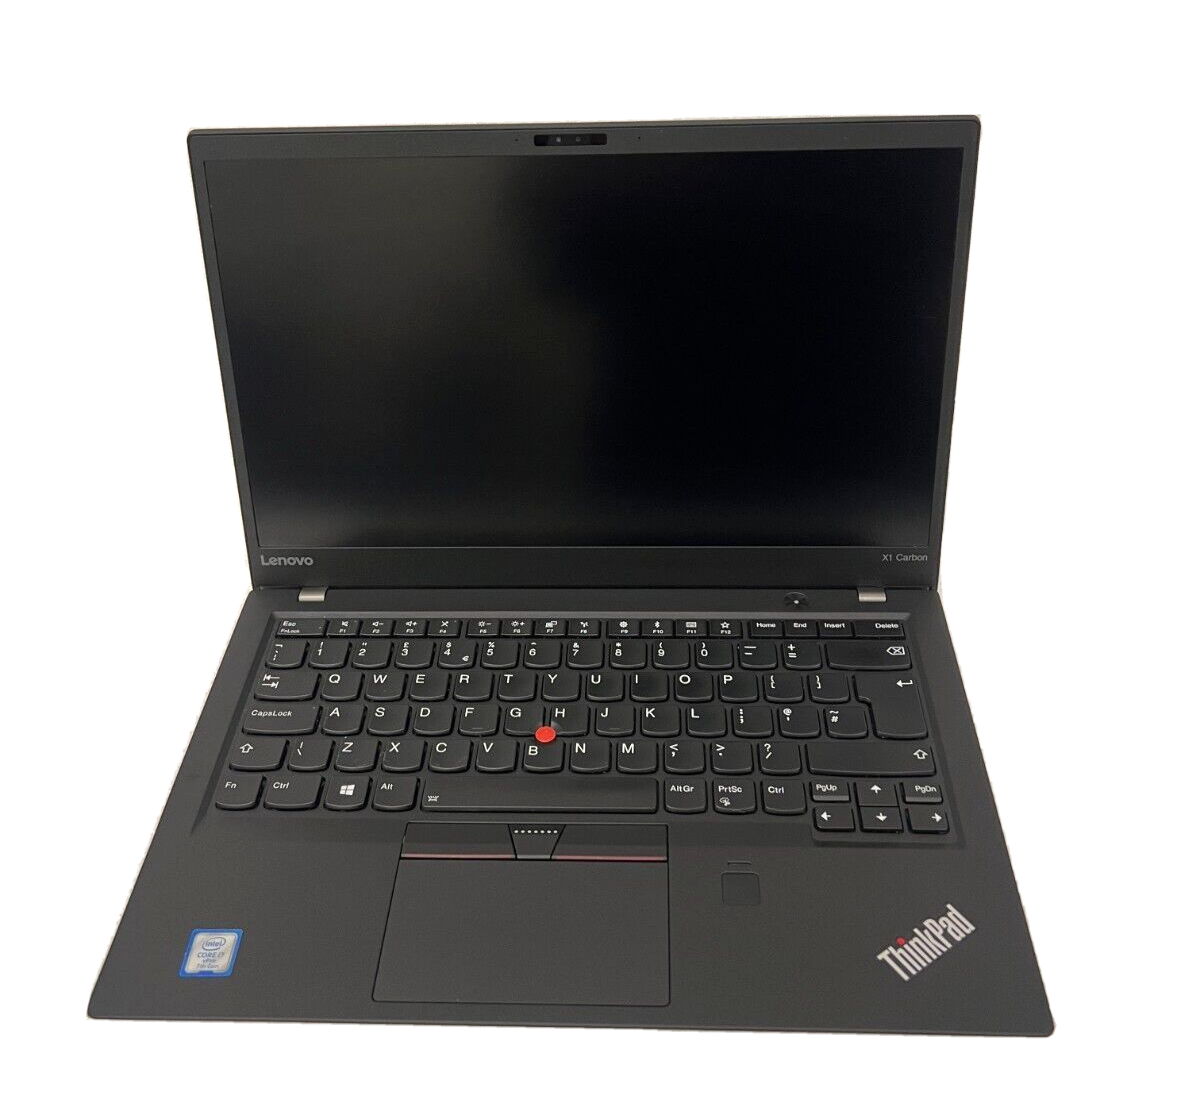 Lenovo Thinkpad X1 Carbon laptop i7-7600U 5thGEN Turbo 3.9GHz 16GB 256GB SSD 14"